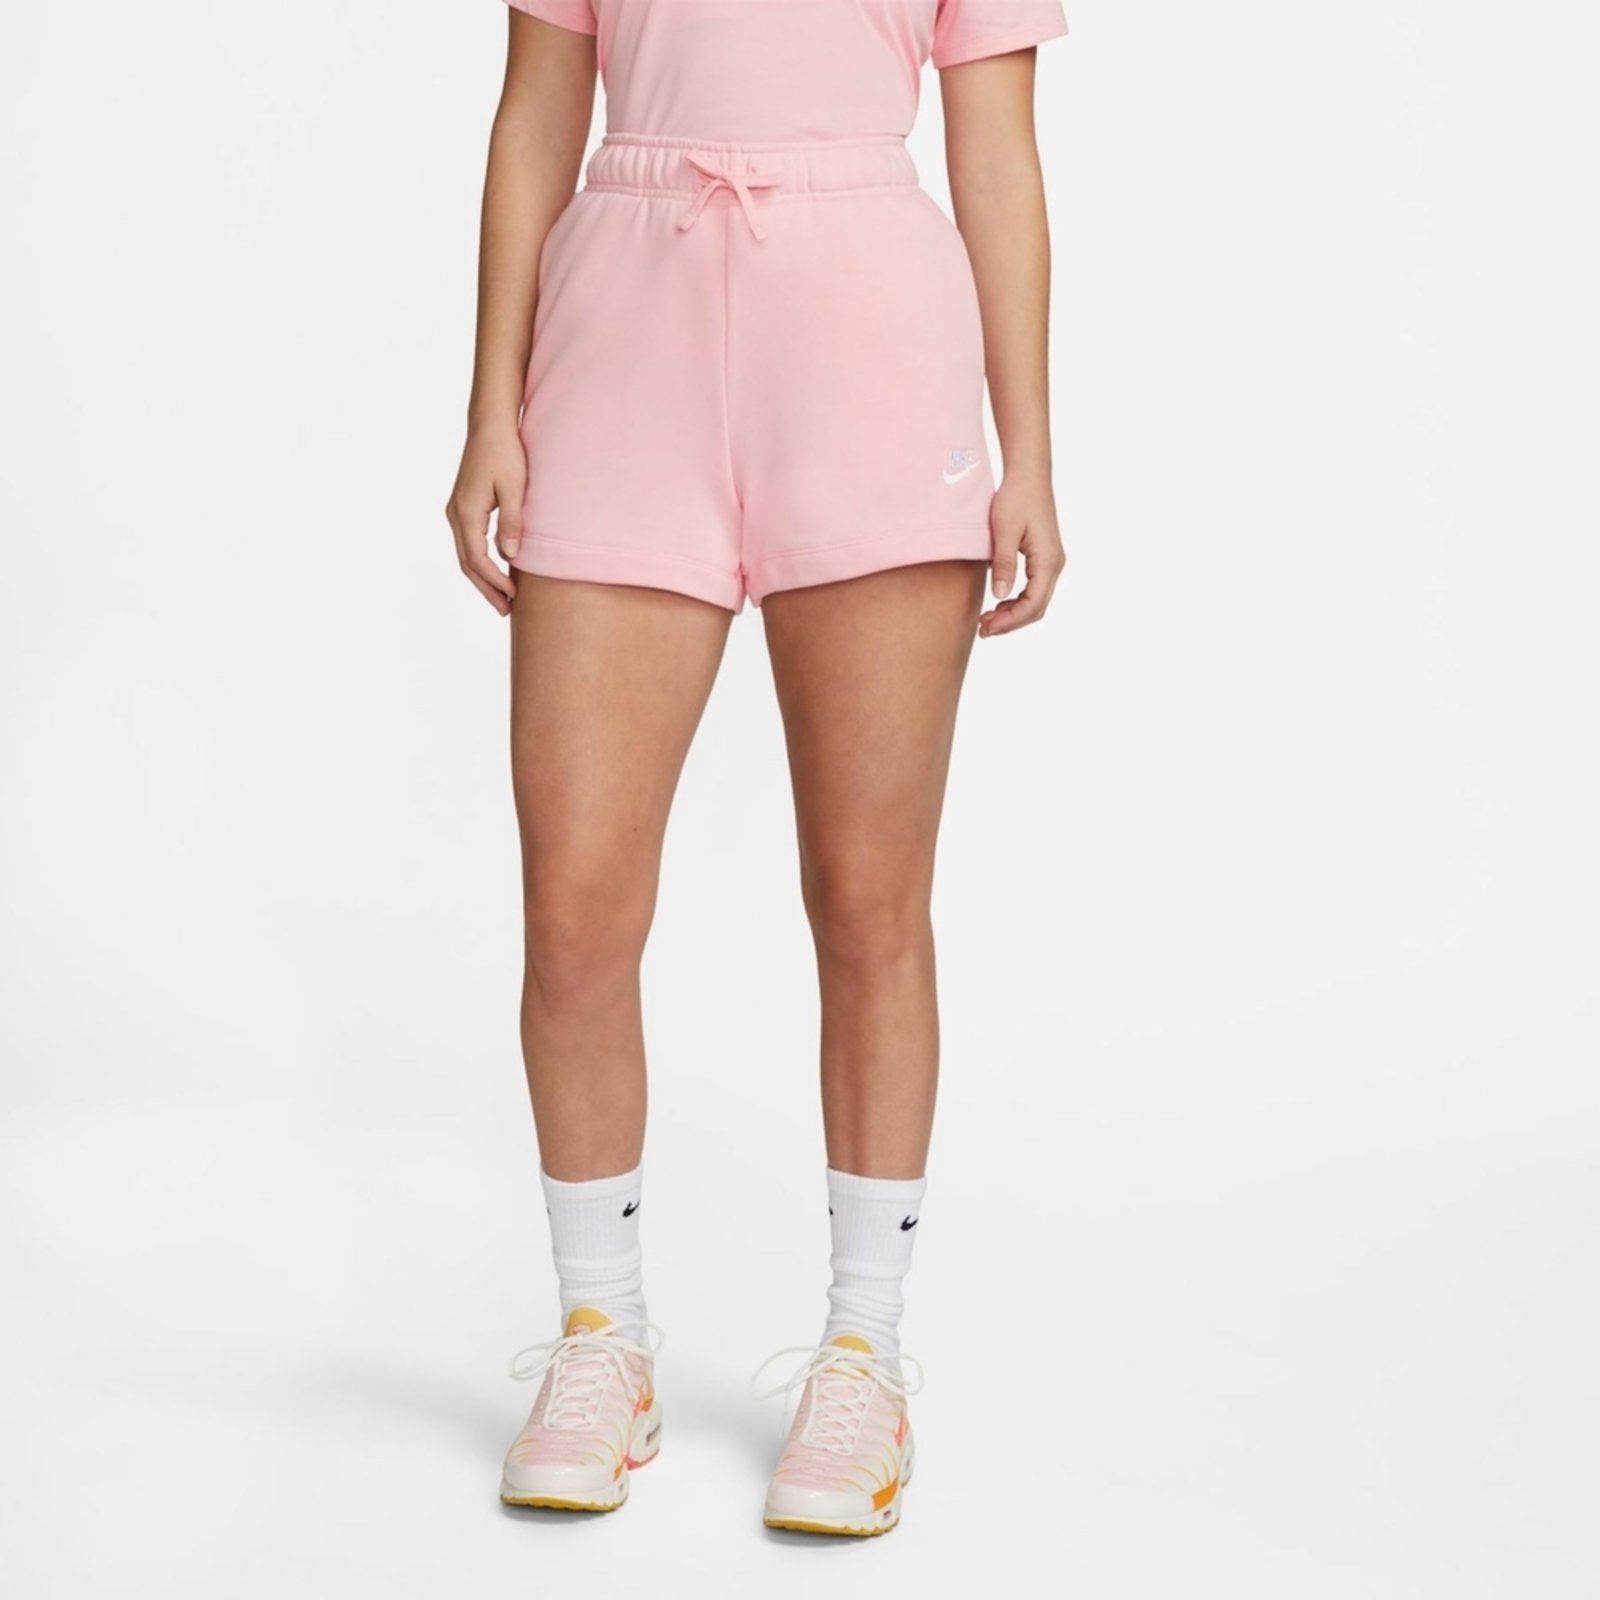 Pink Nike Shorts for Women